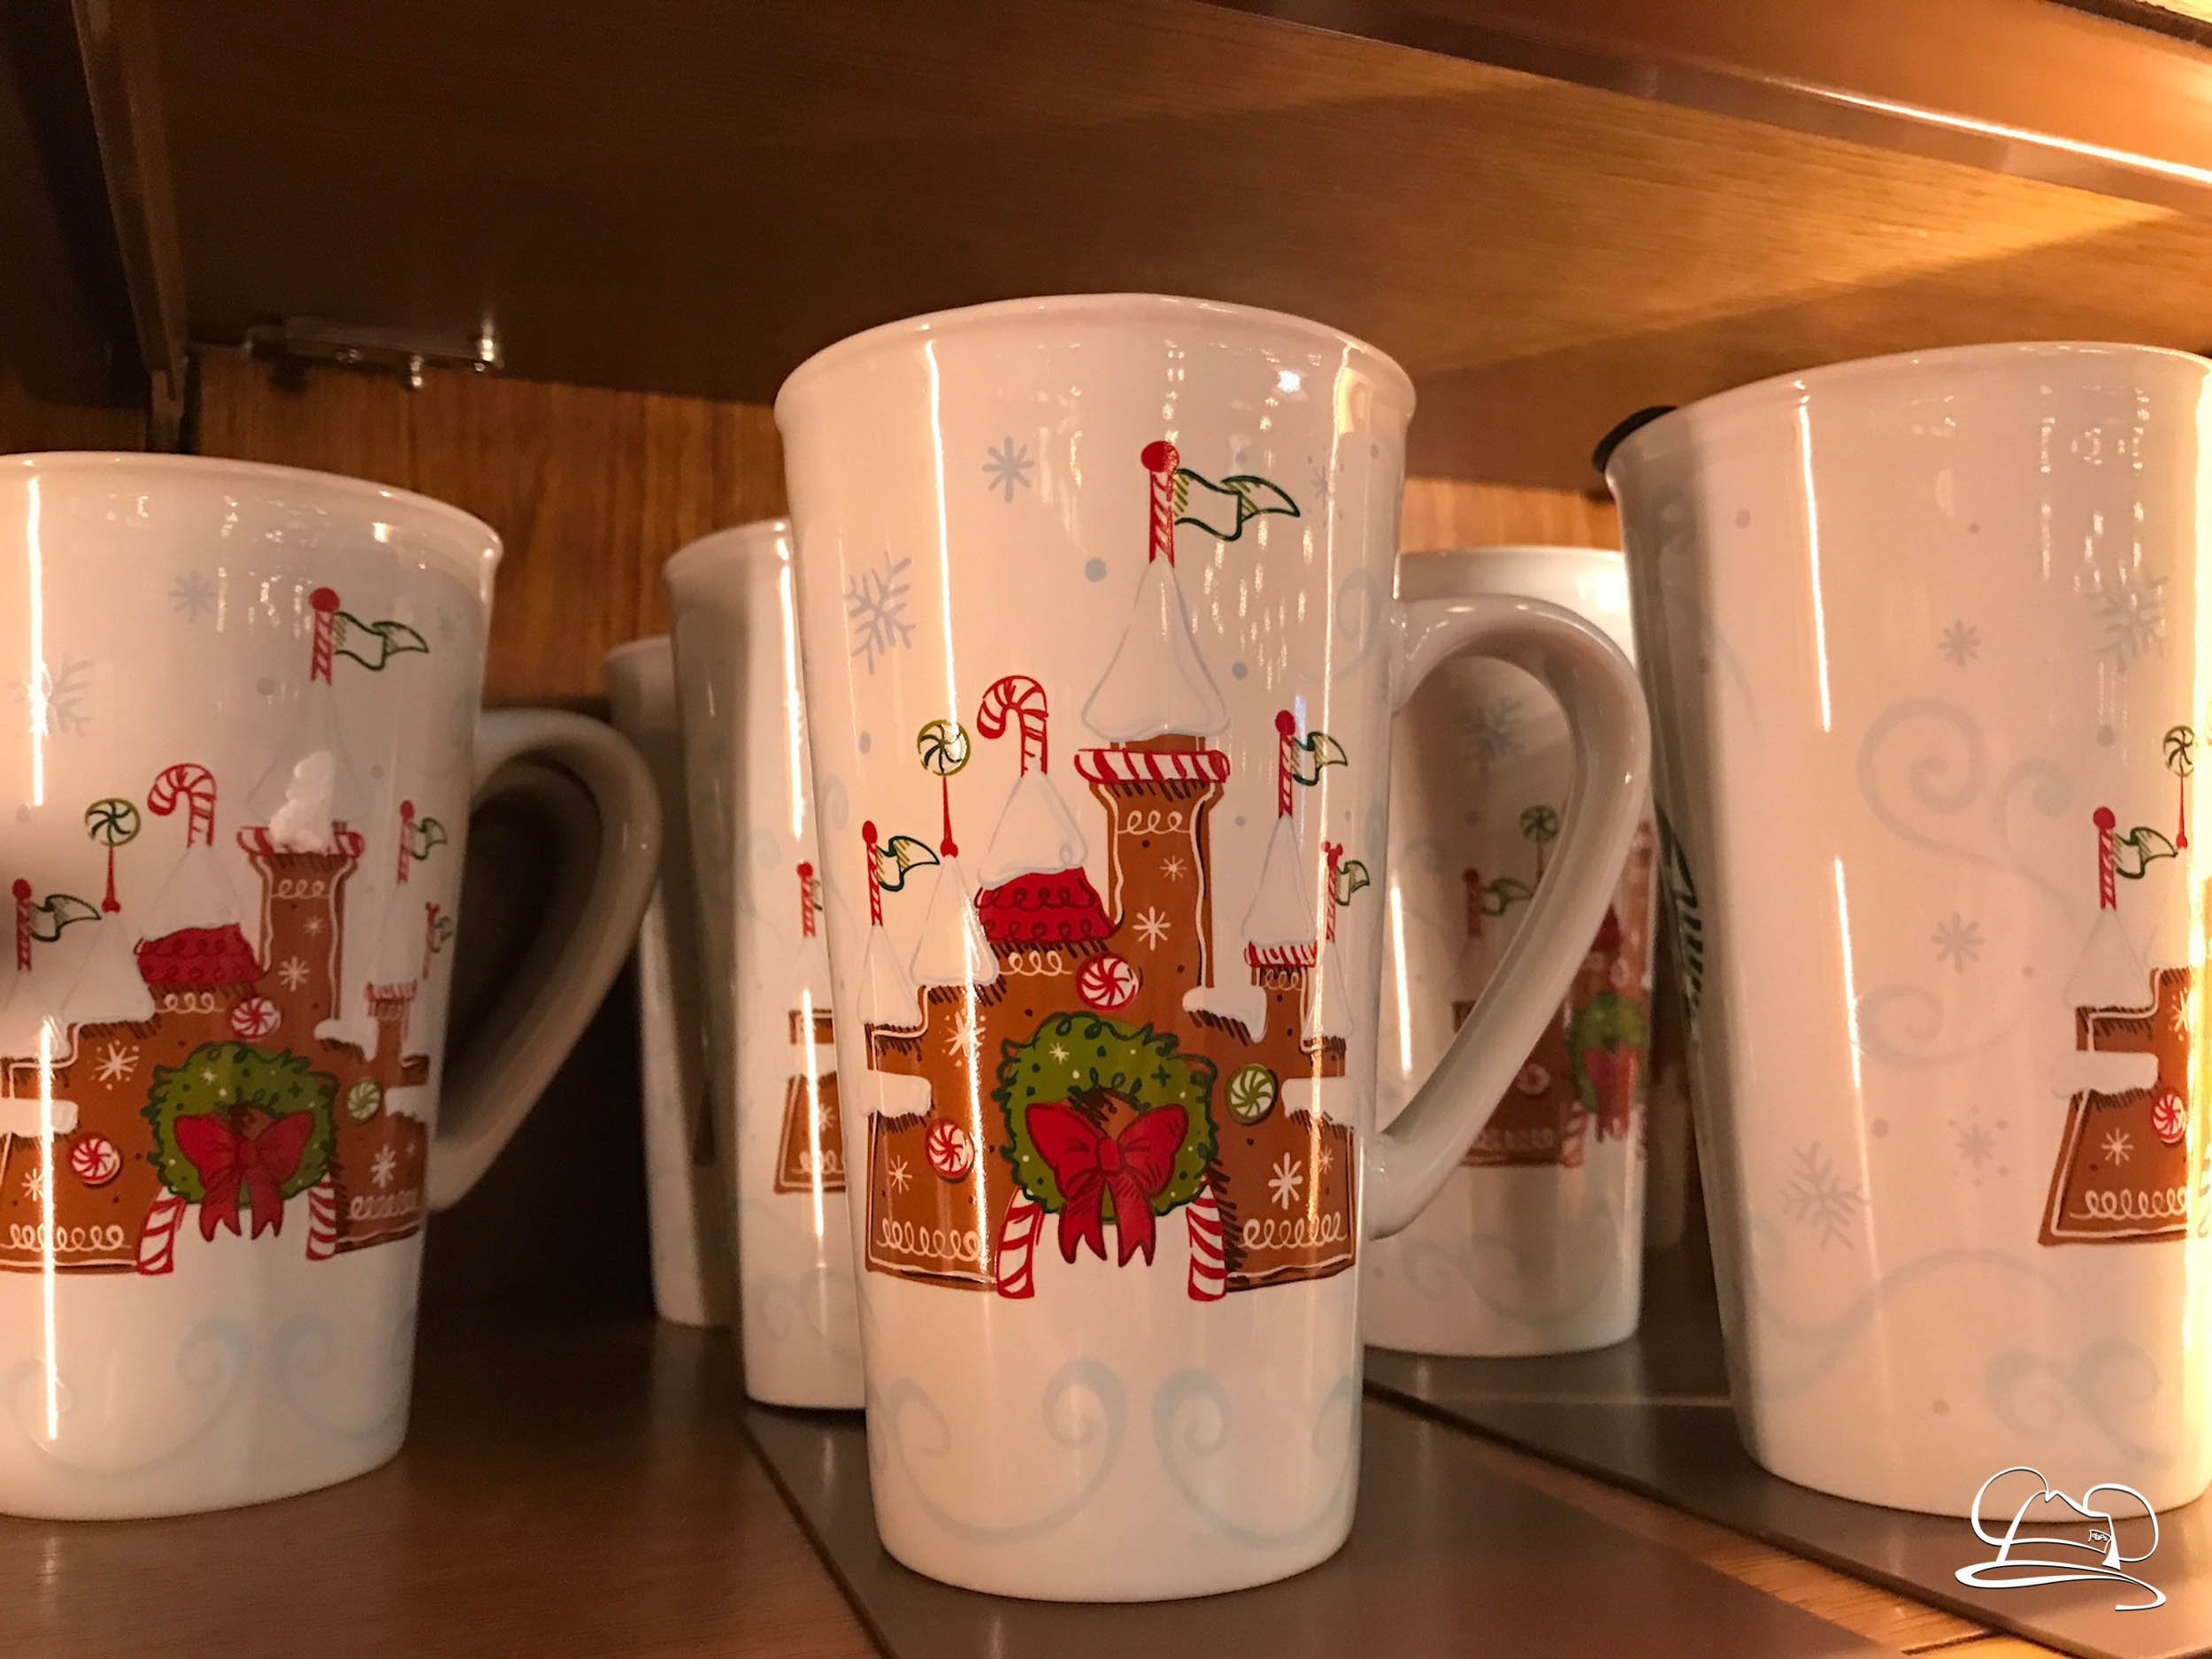 Holiday Starbucks Mugs and Ornaments Arrive at Disneyland Resort